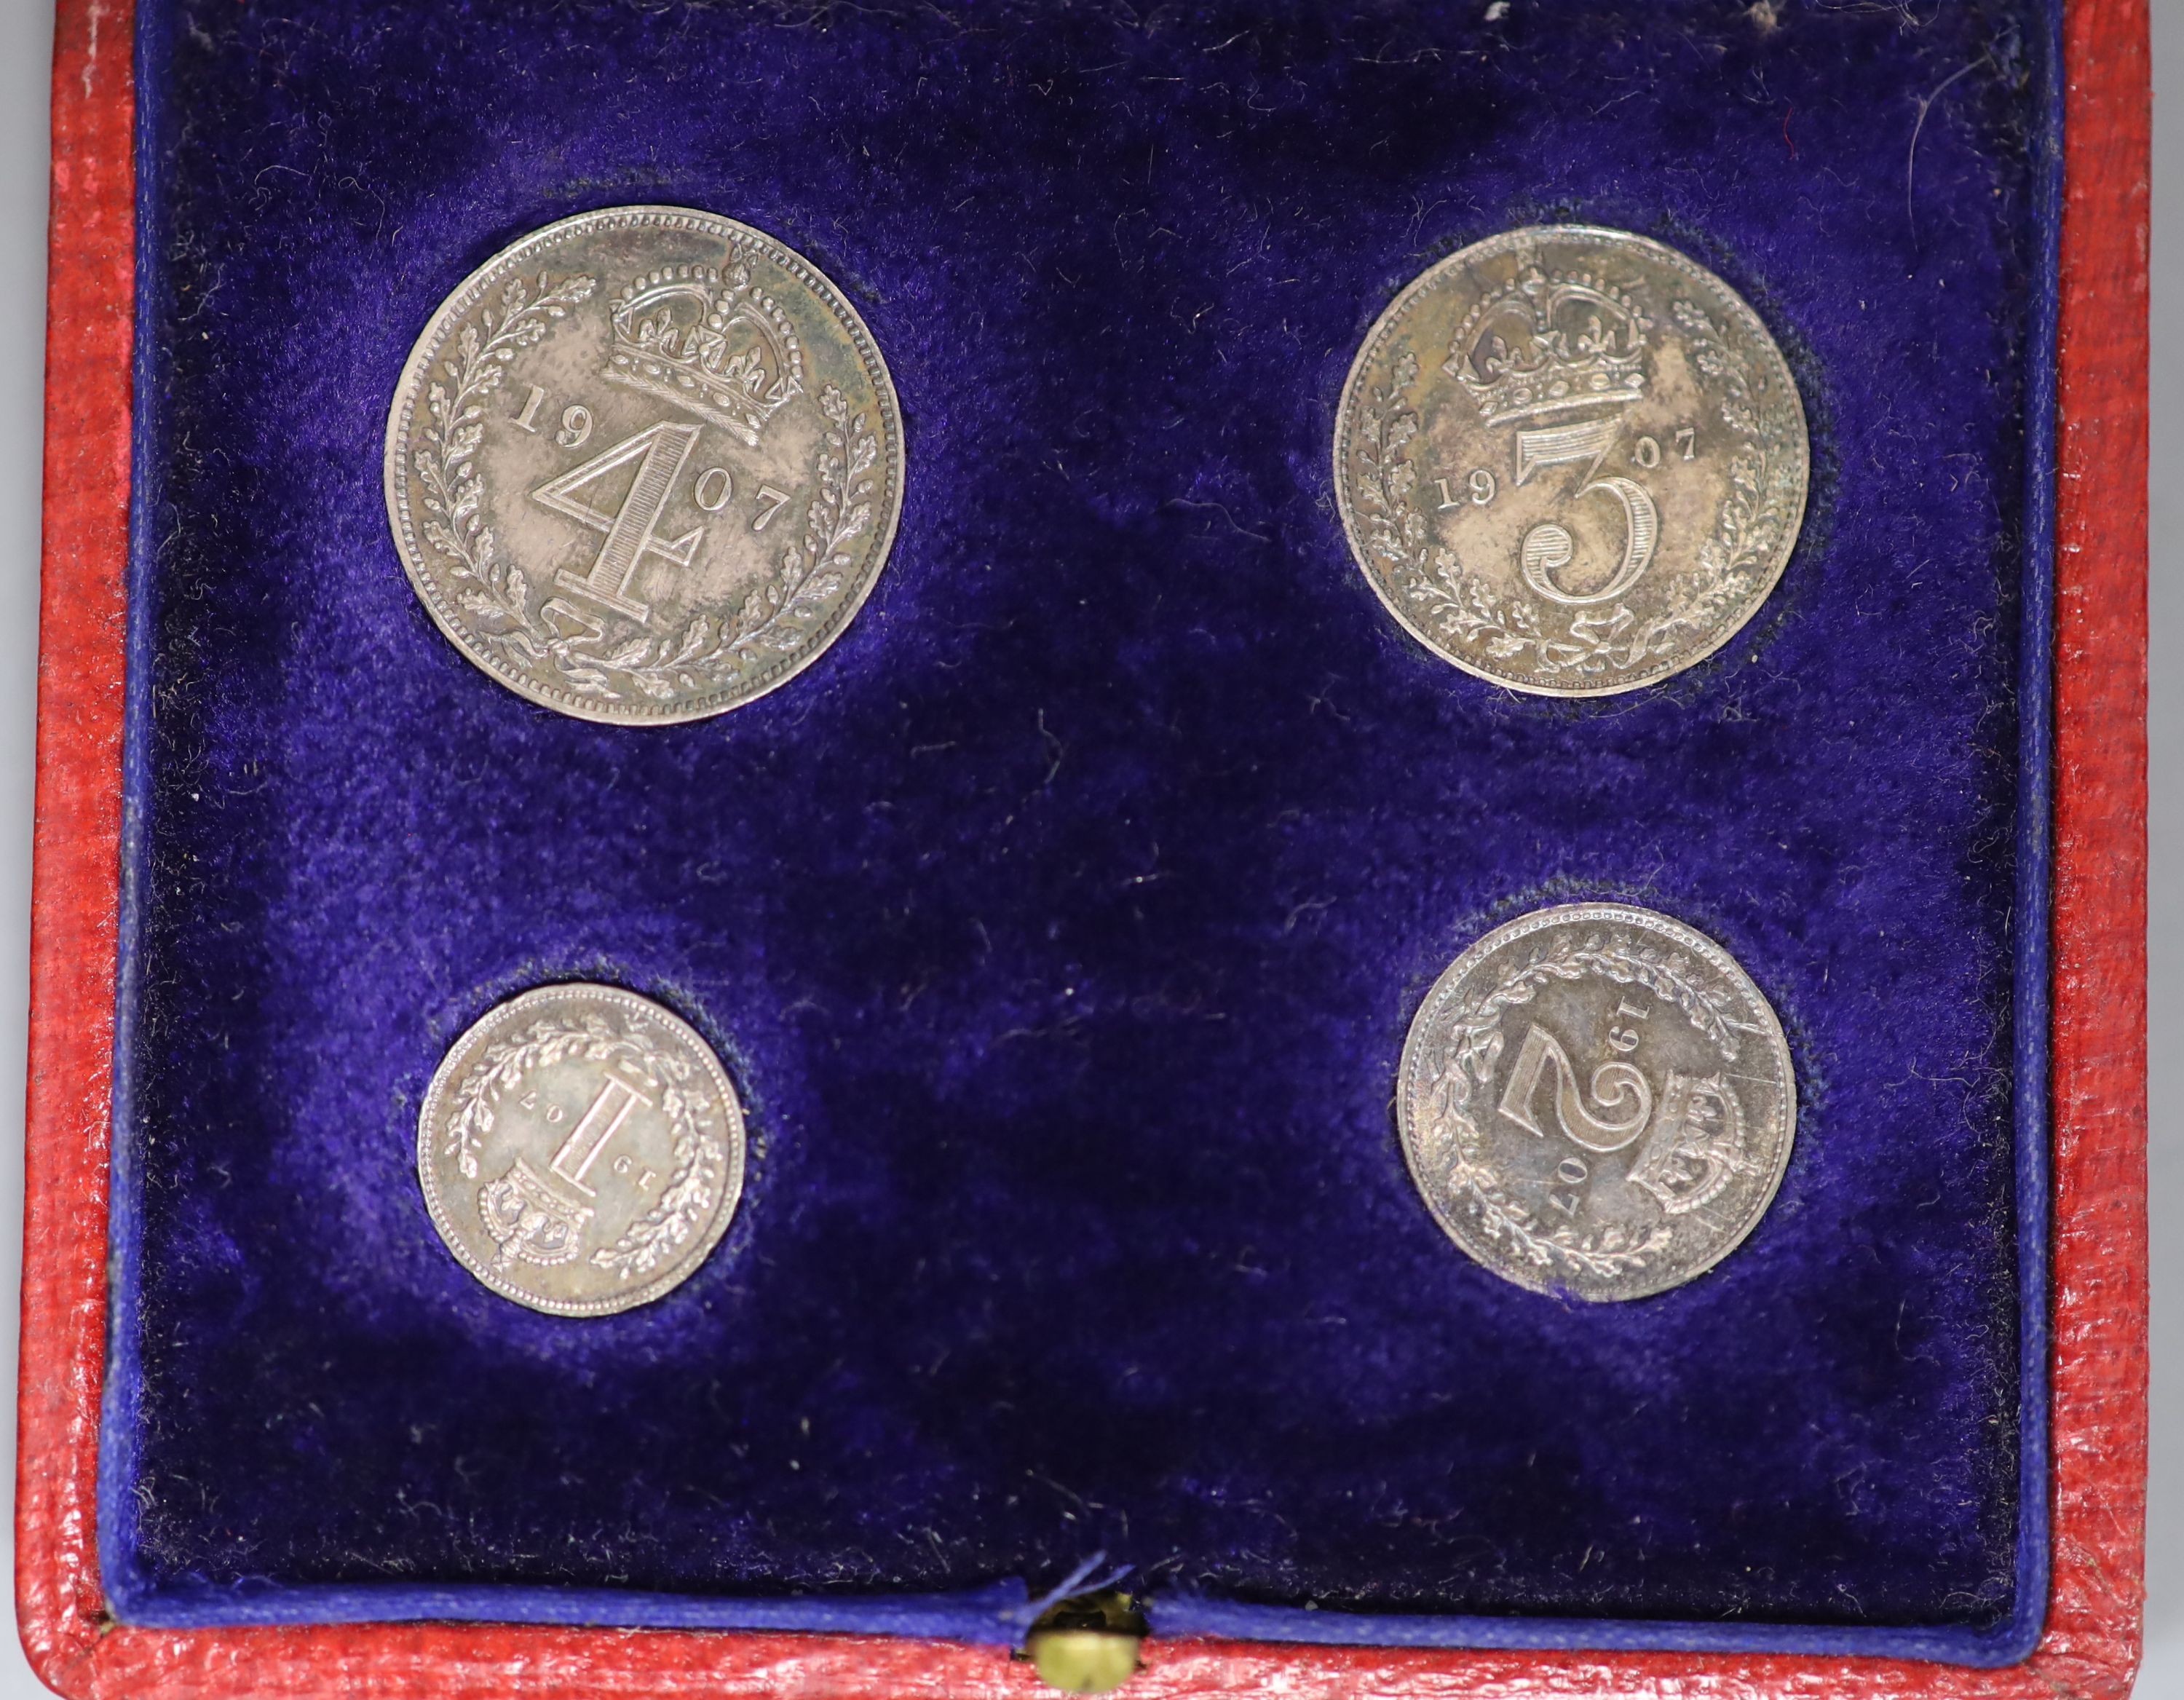 A cased Edward VII maundy coin set, 1907